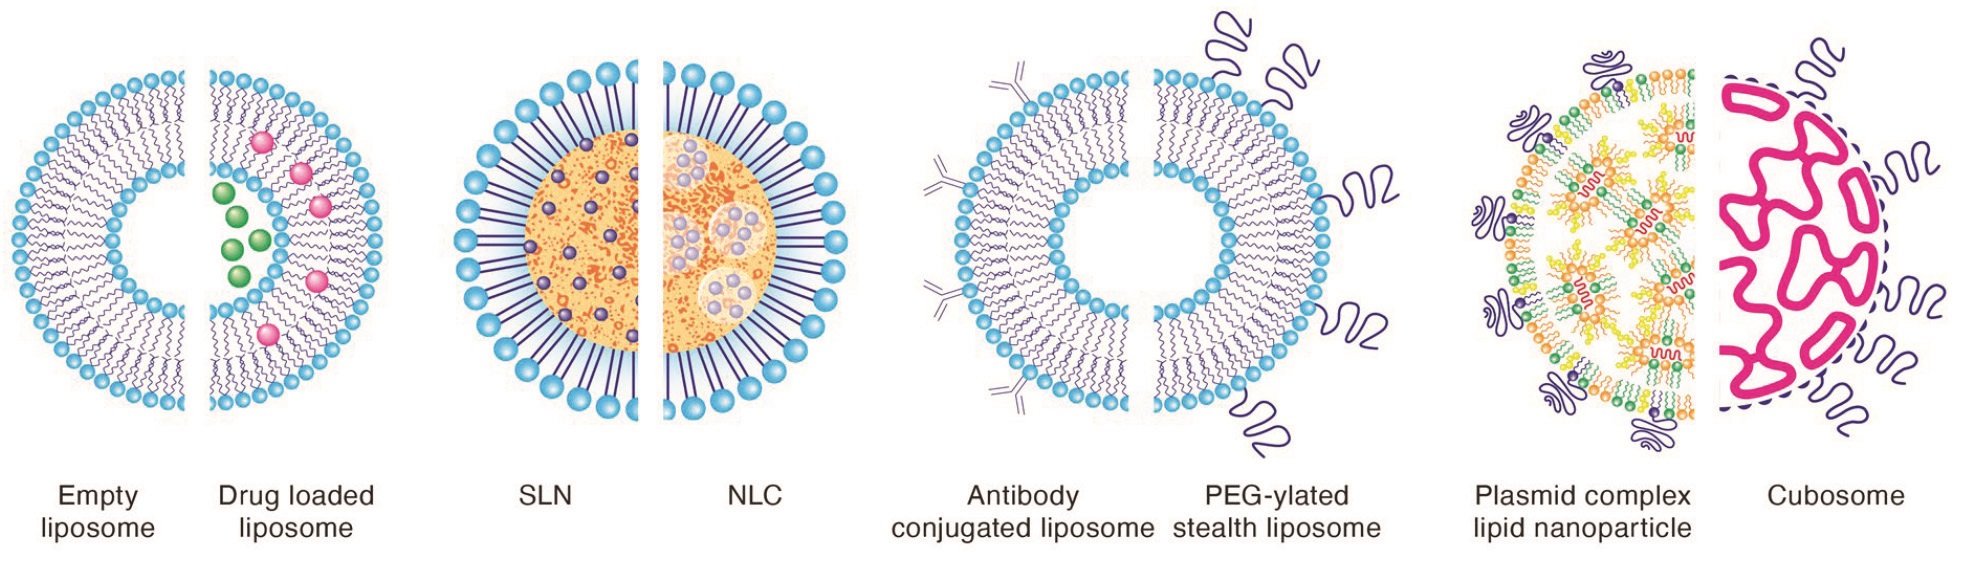 Examples of LipidSol lipid nanoparticle technology, including an empty liposome vs. drug-loaded liposome, SLN vs. NLC, antibody-conjugated liposome vs. PEG-ylated stealth liposome, and plasmid complex lipid nanoparticle vs. cubosome